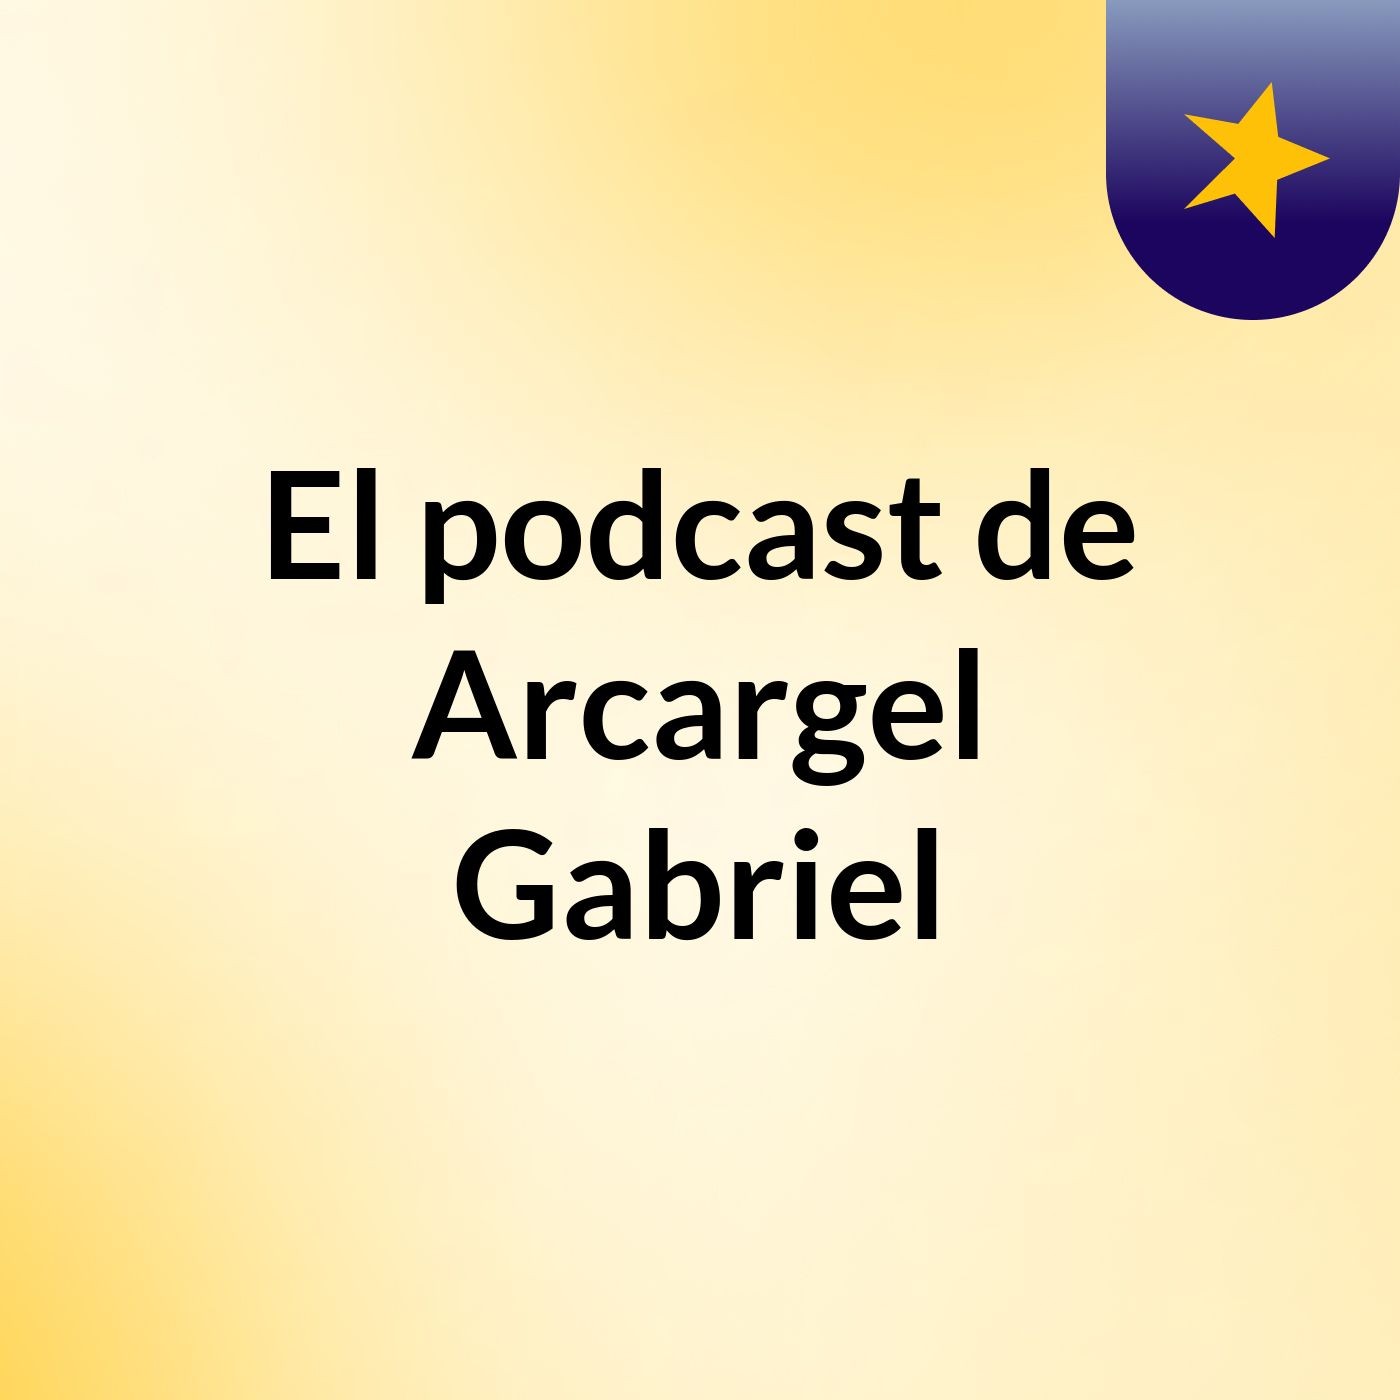 El podcast de Arcargel Gabriel